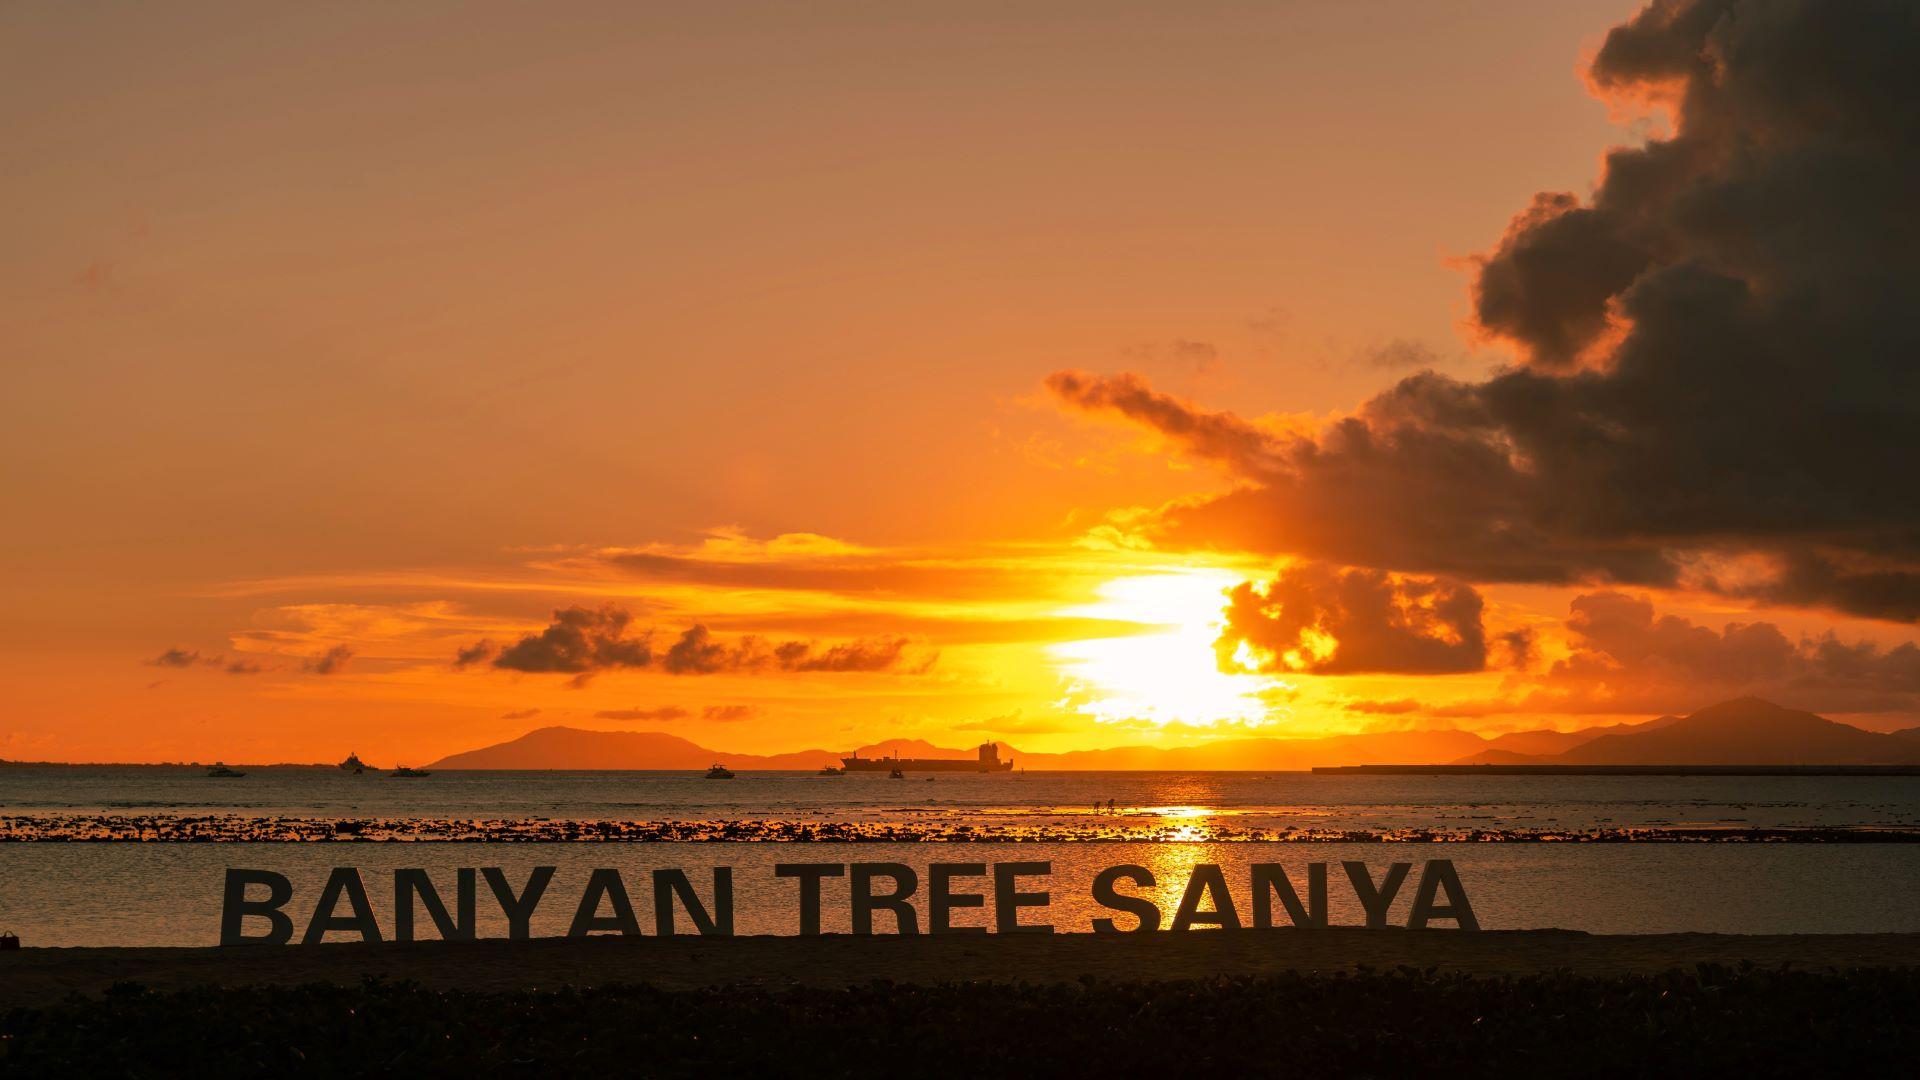 Banyan Tree China Sanya Gallery - Sunset